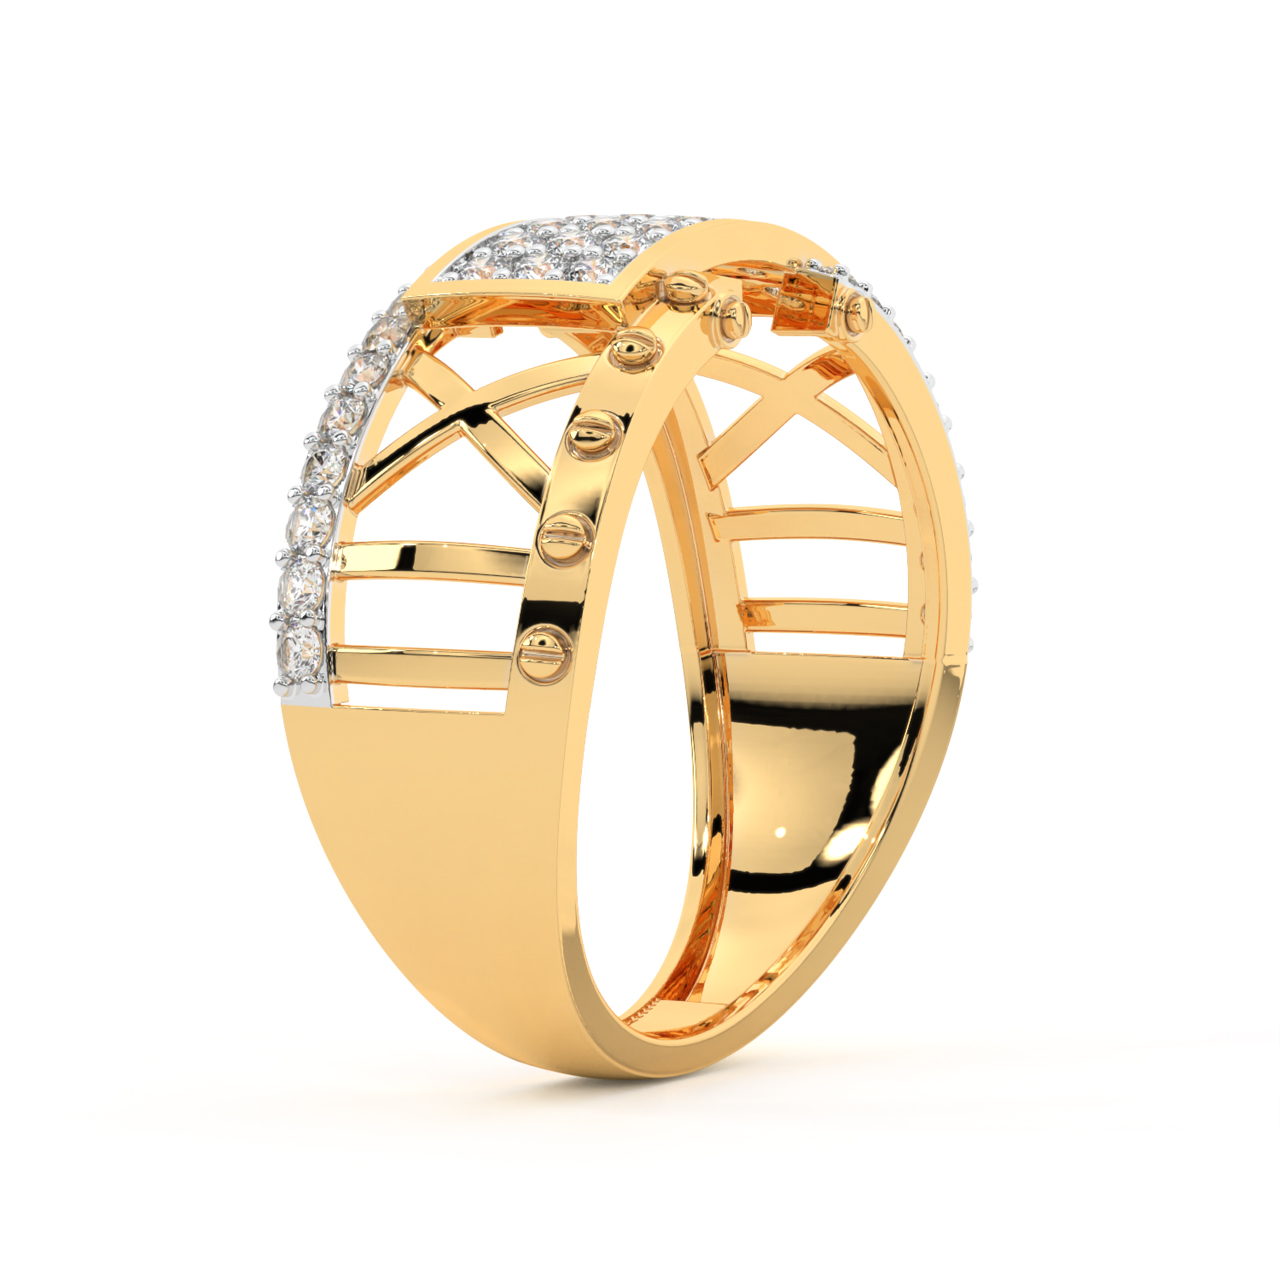 Buy Jali Design Engagement Ring For Men Online